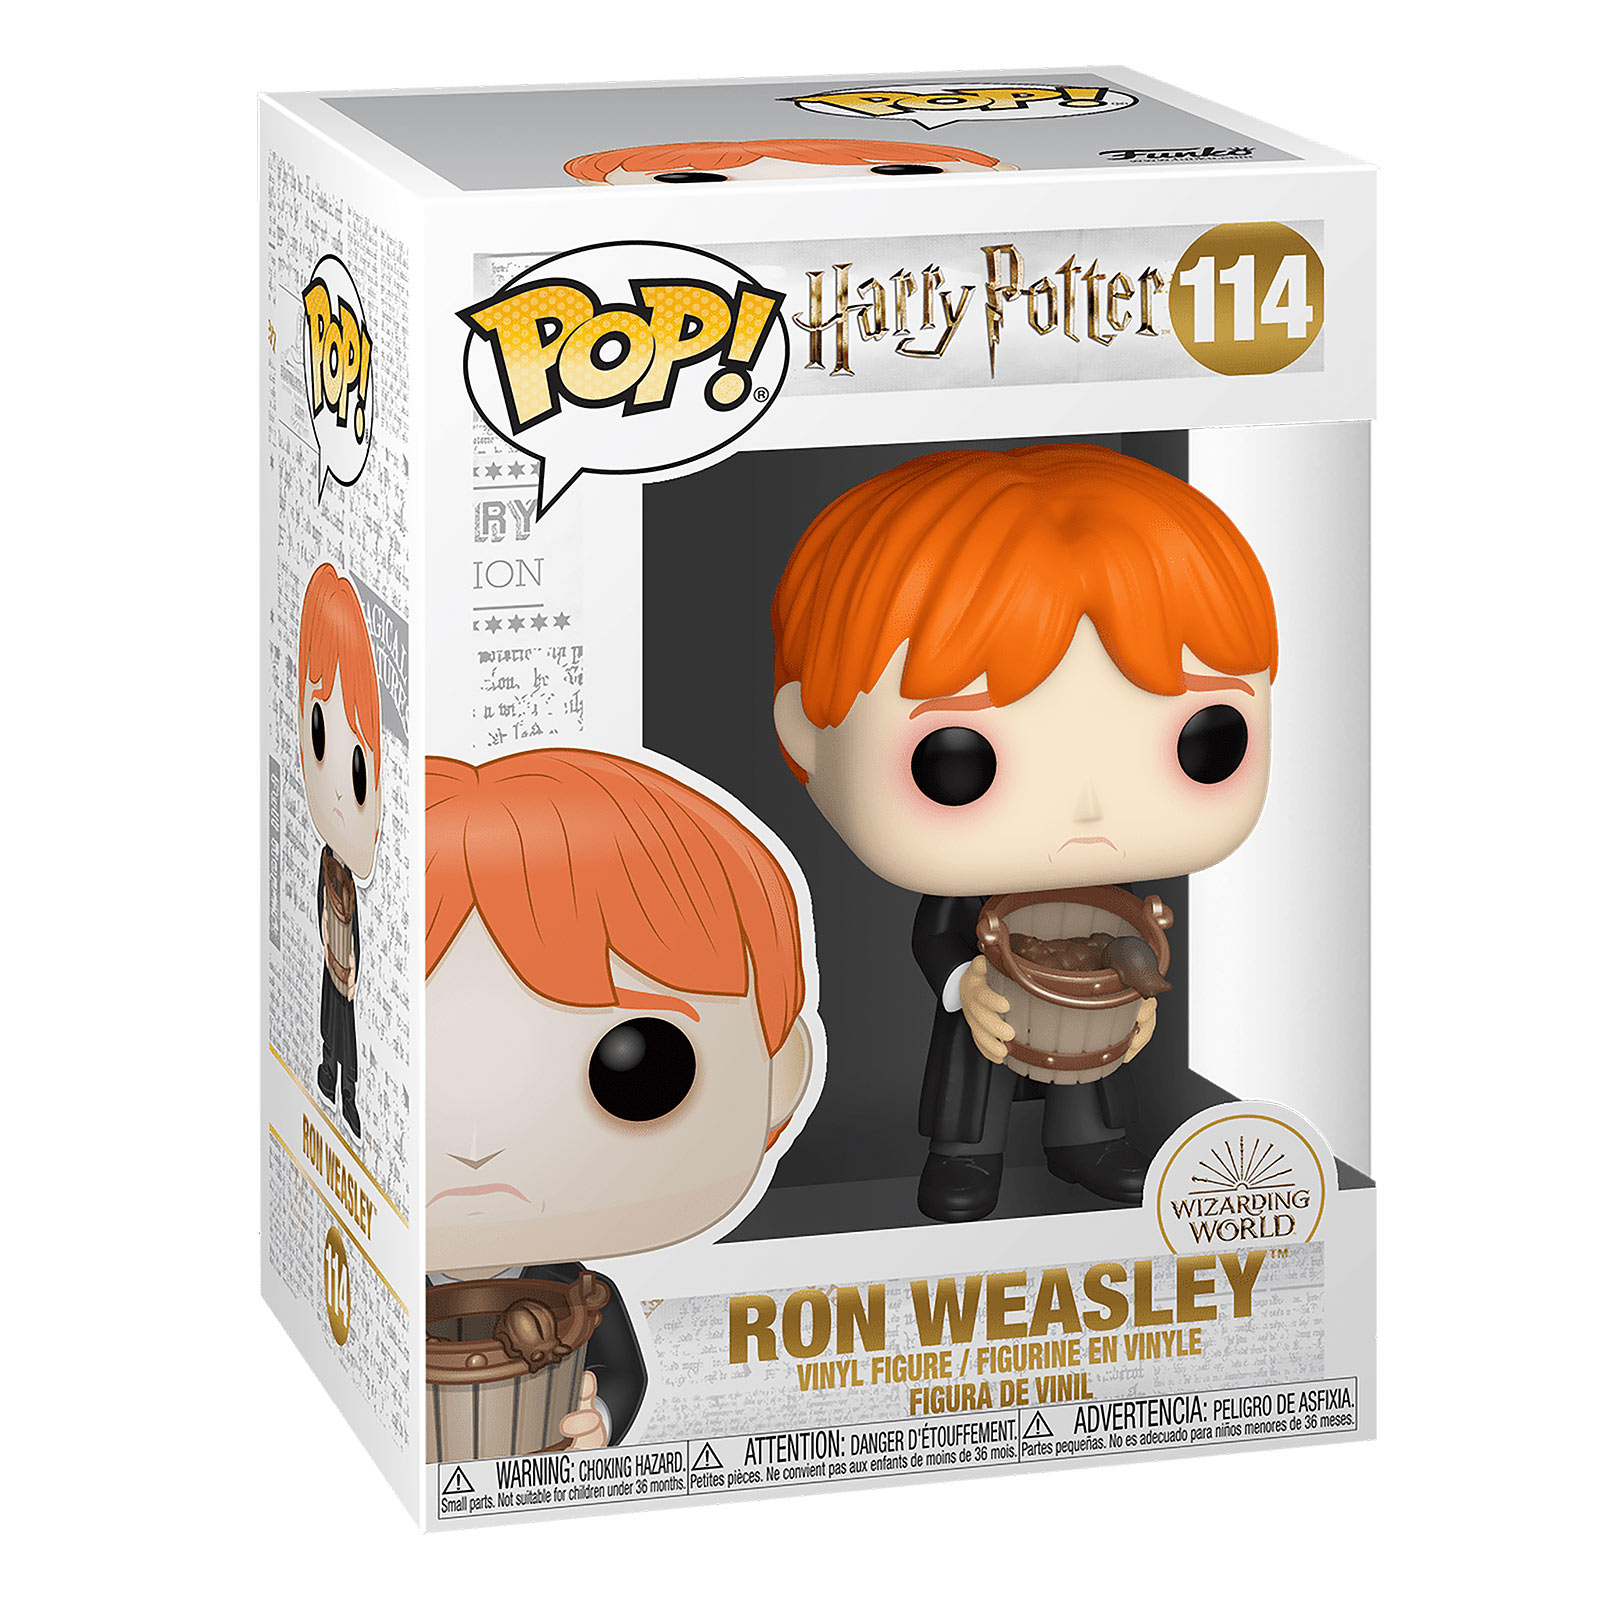 Harry Potter - Ron with snails Funko Pop figure